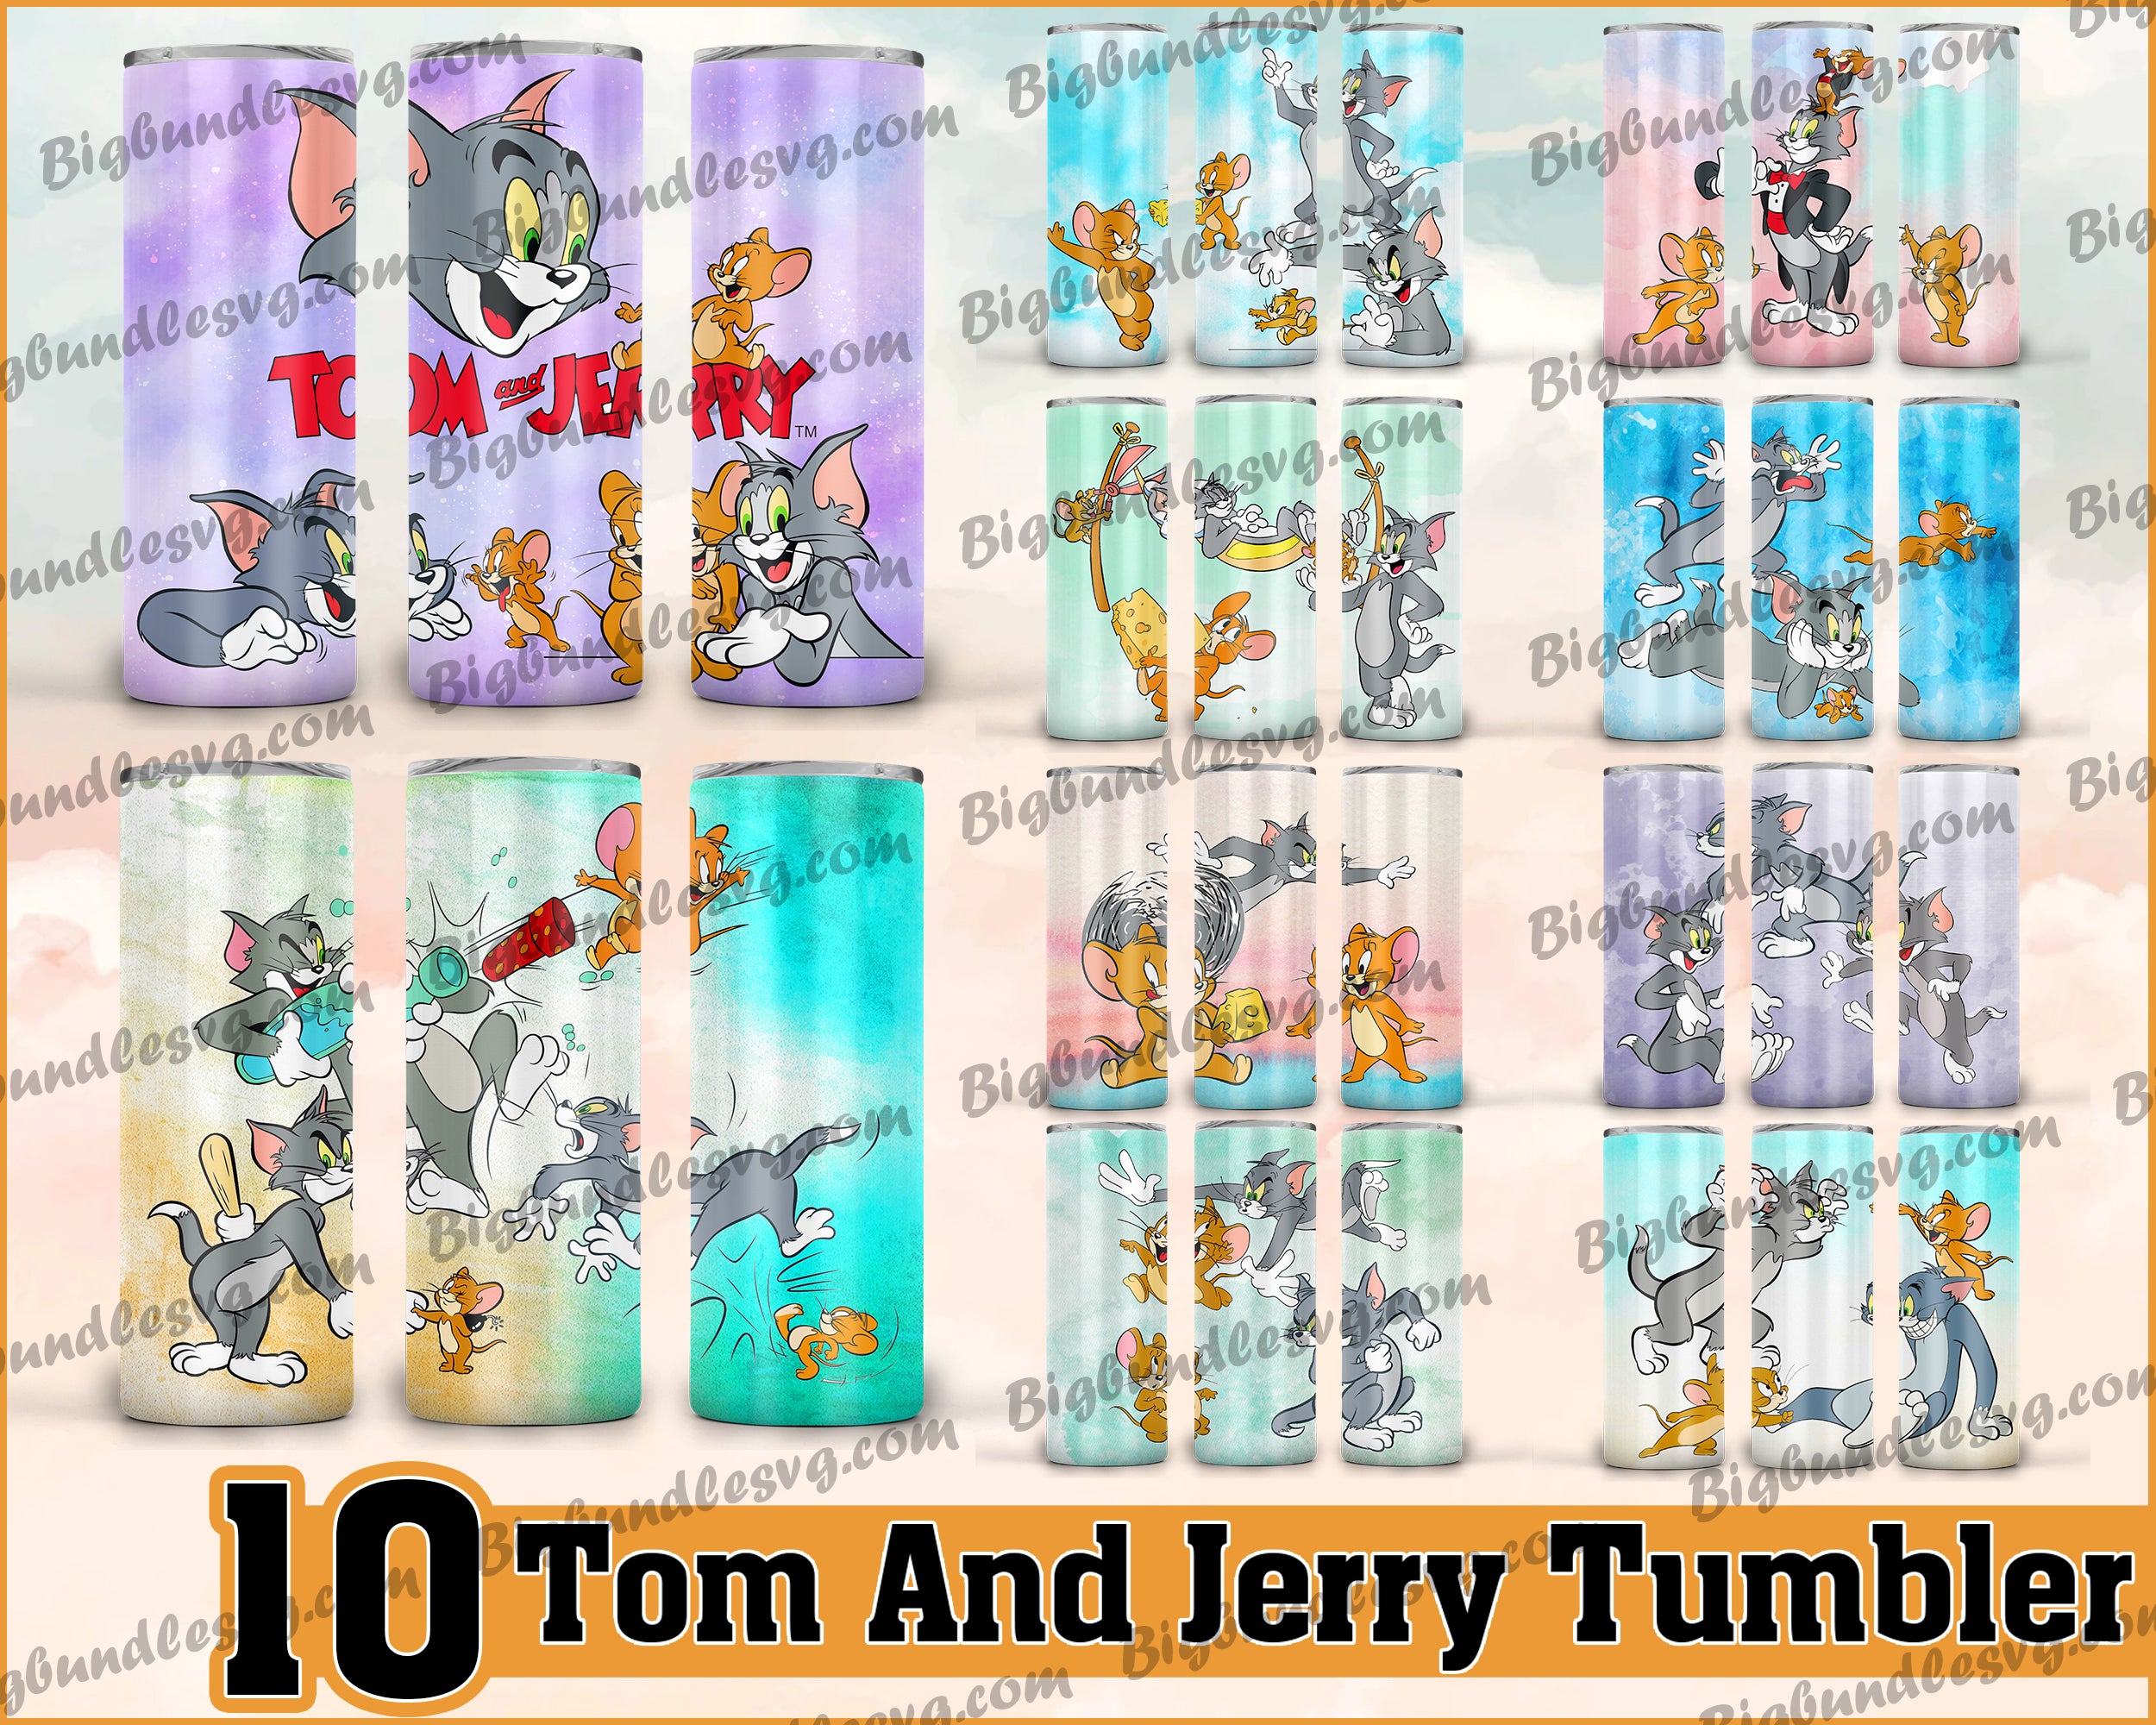 Tom & Jerry Tumbler - Tom & Jerry PNG - Tumbler design - Digital download